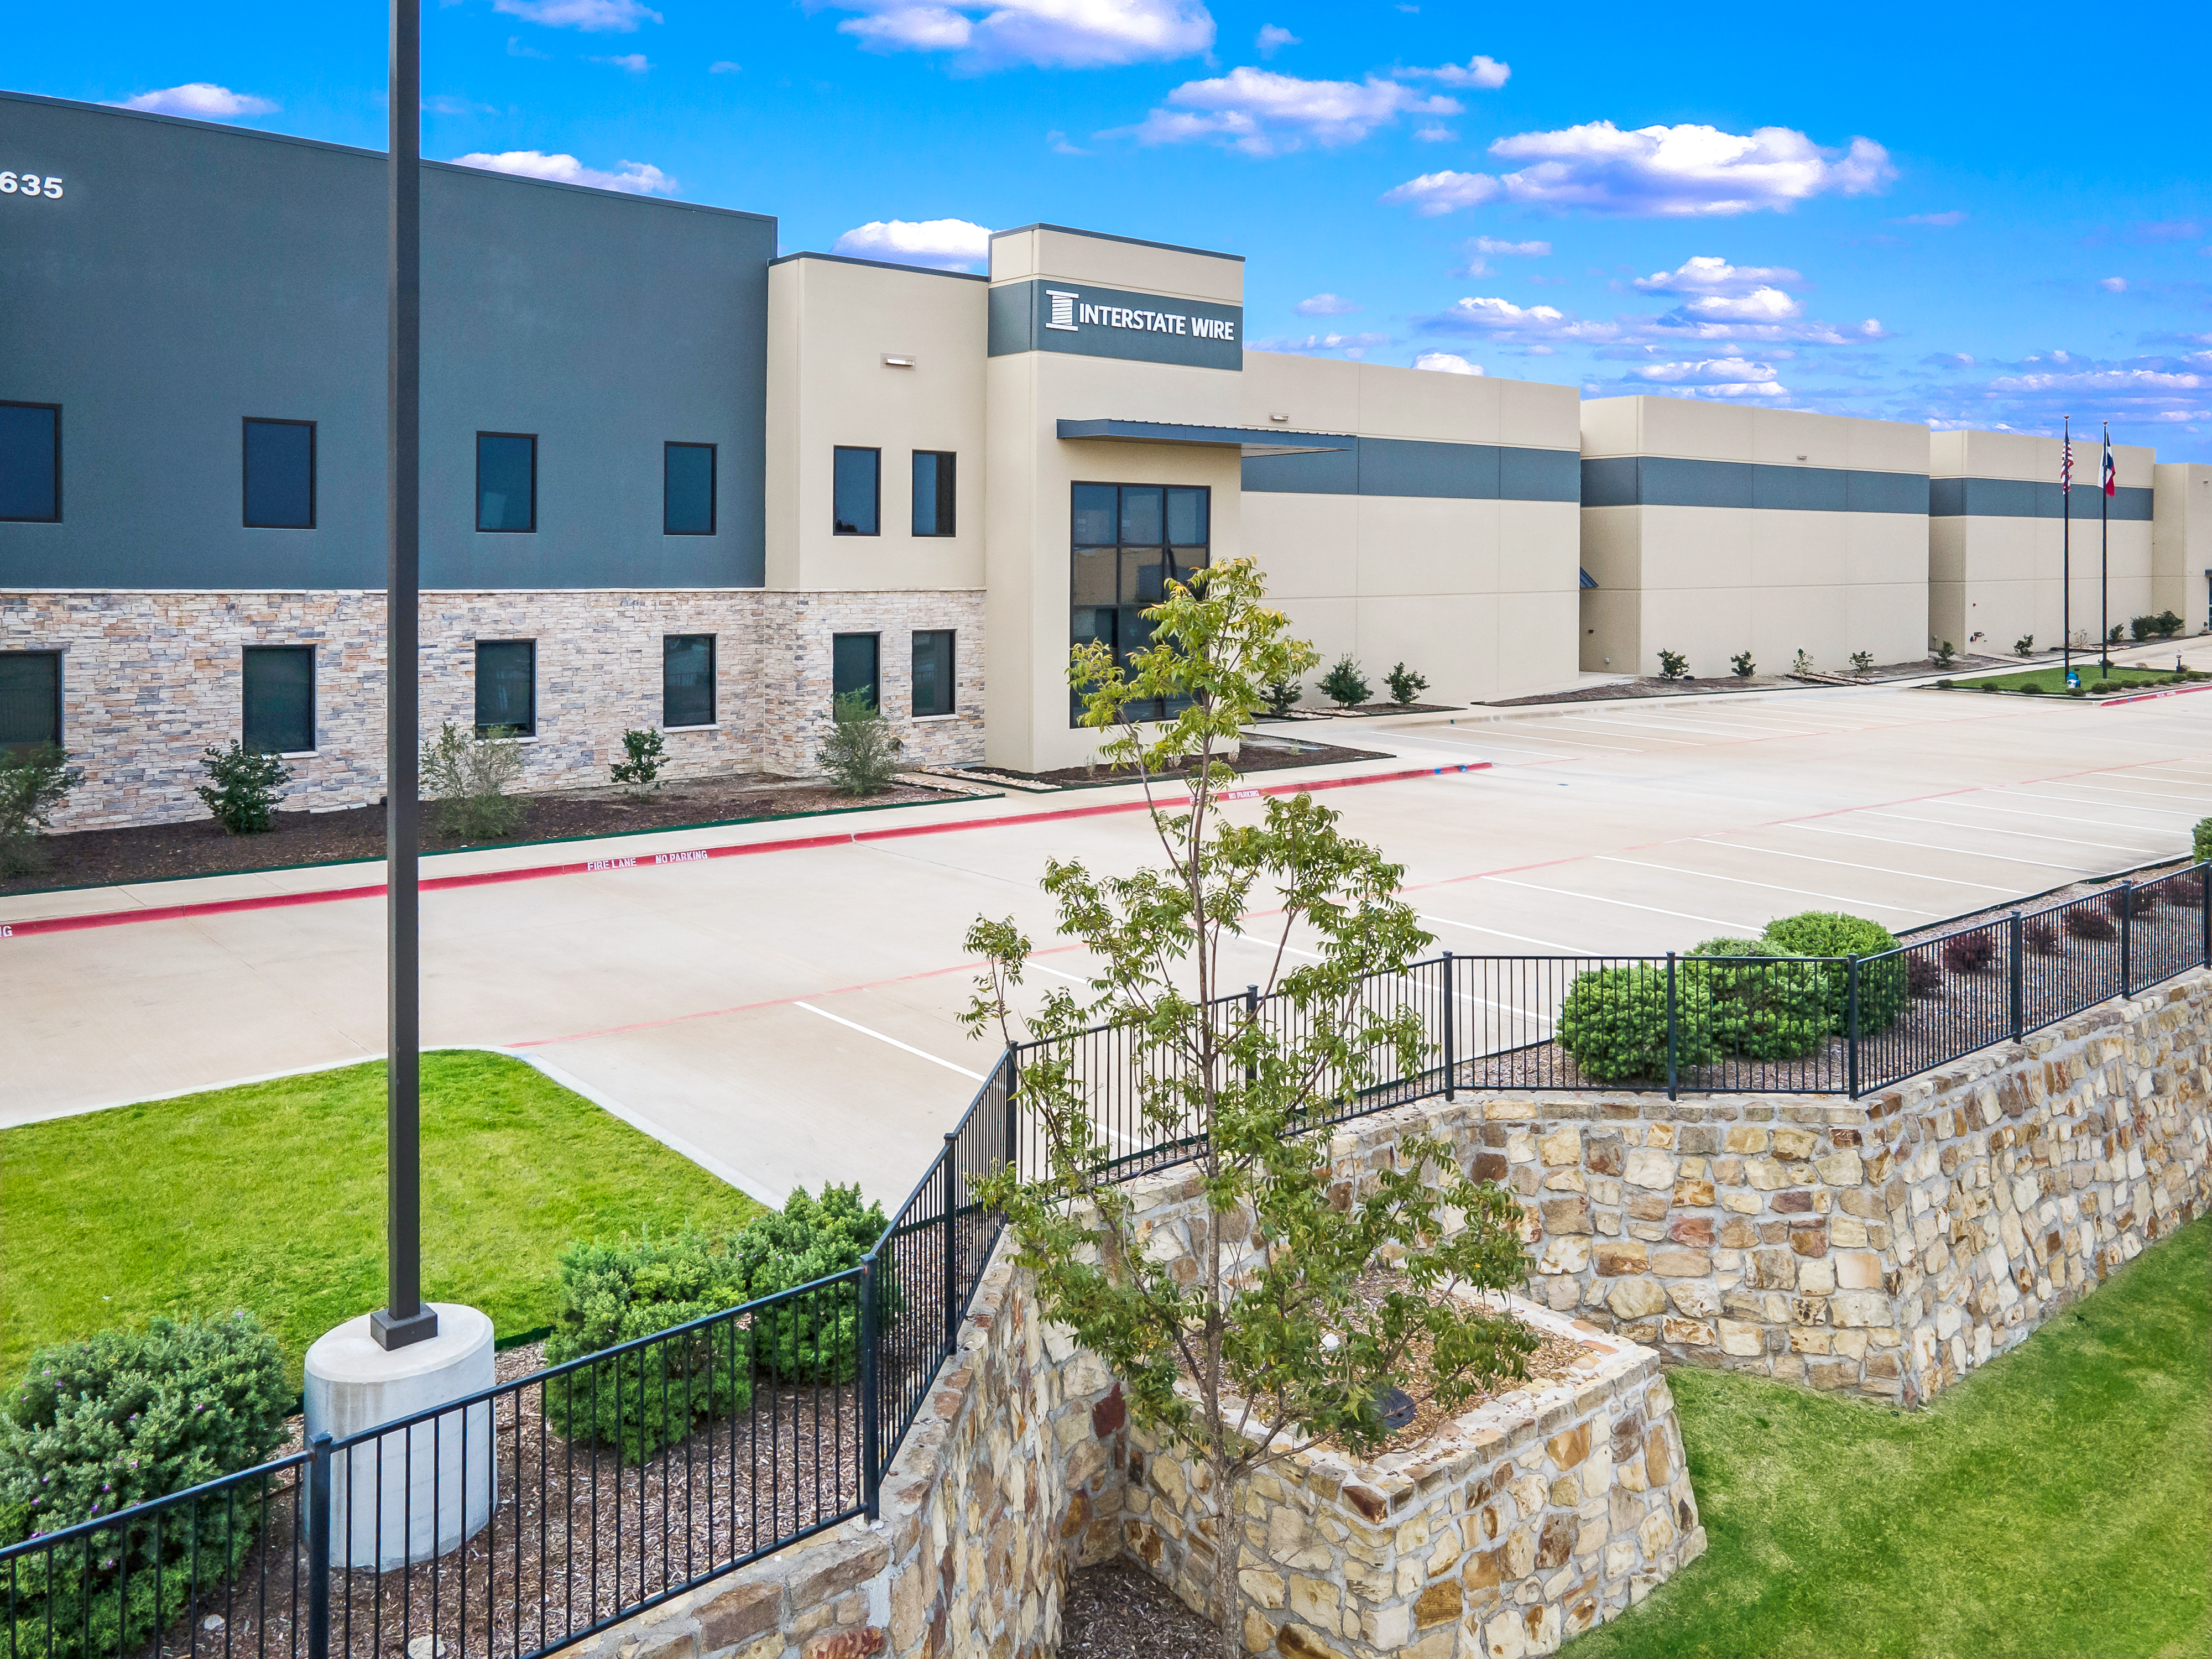 Interstate Wire Headquarters in Rockwall, TX